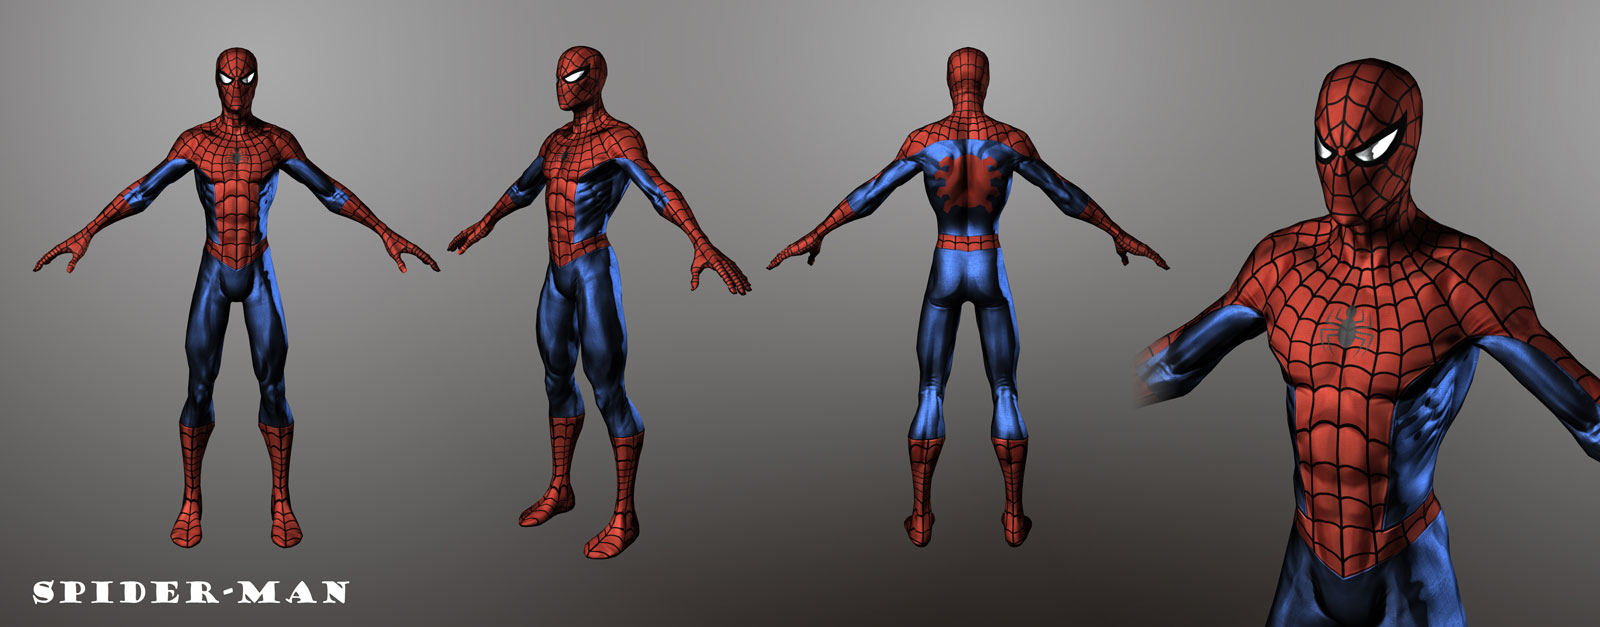 Spider Man Web Of Shadows Torrent  -  9